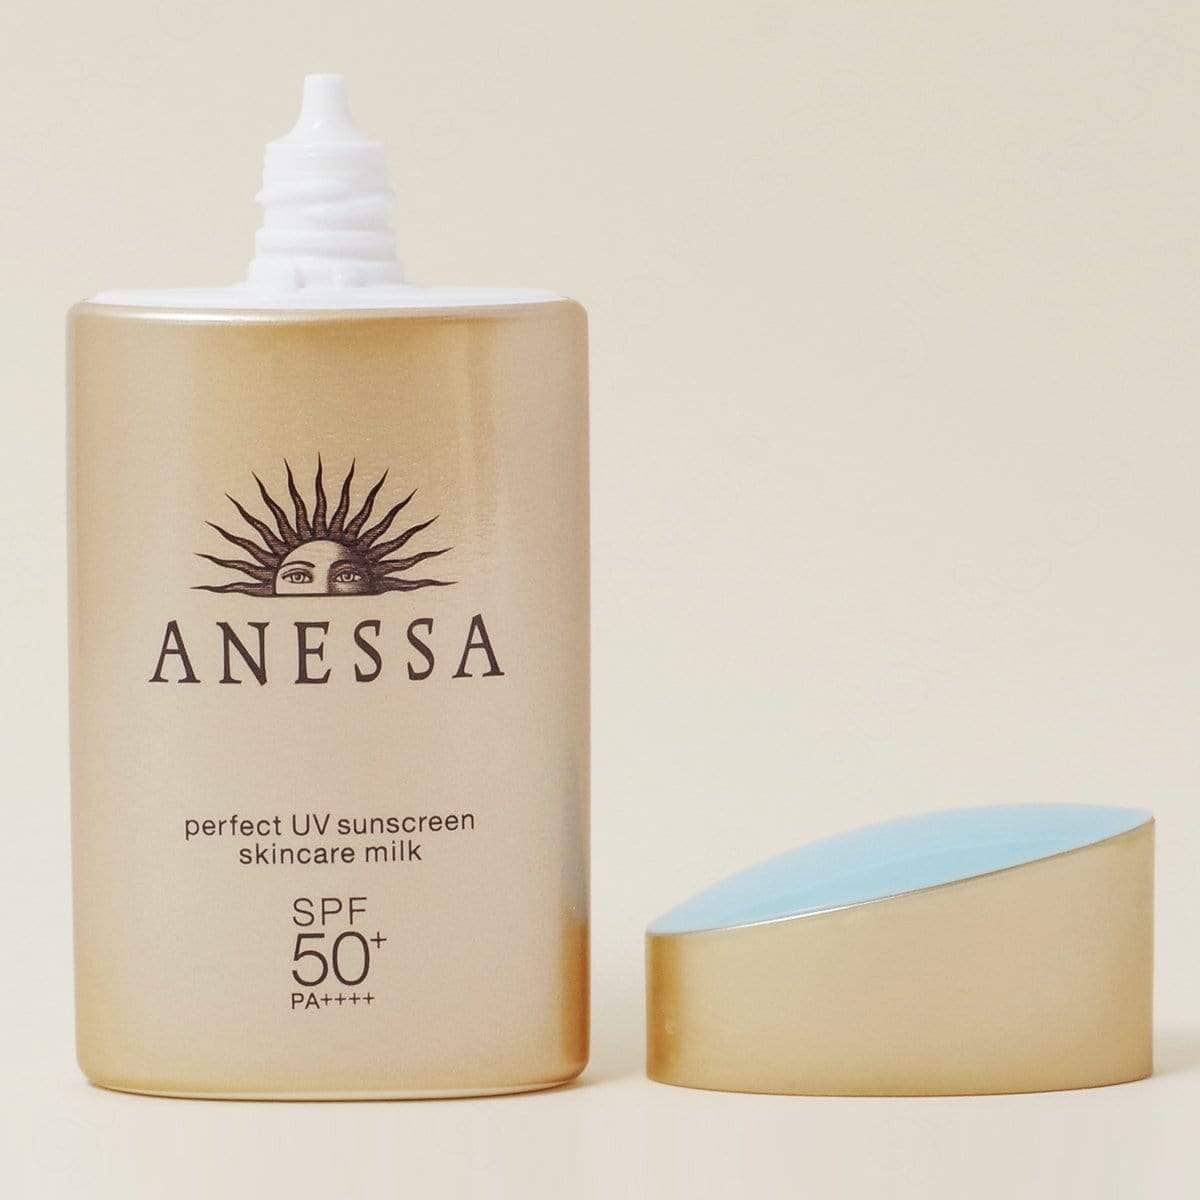 anessa perfect uv sunscreen mild milk